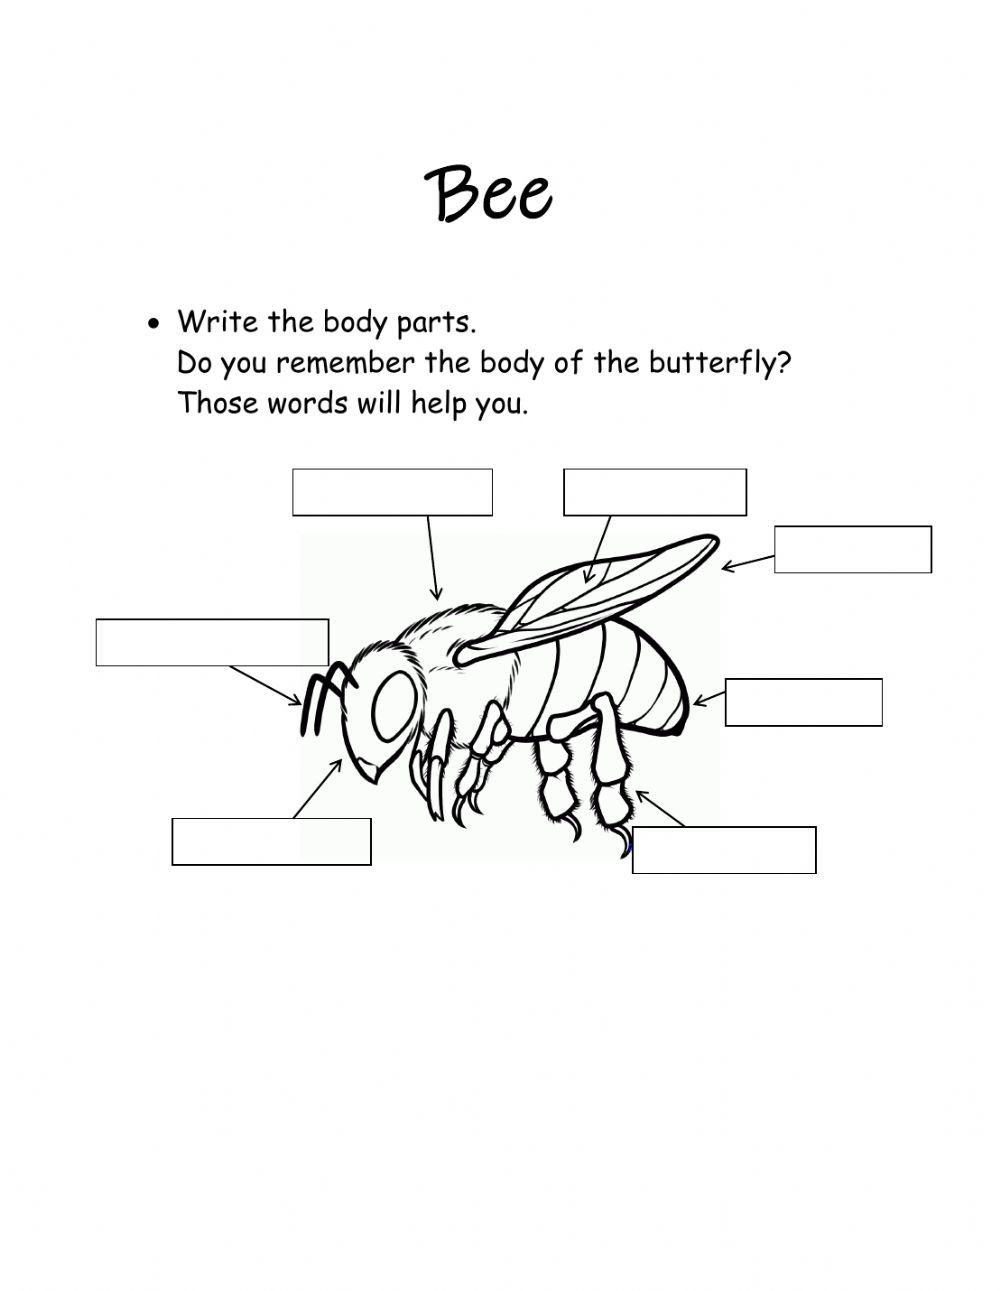 Bee's body parts